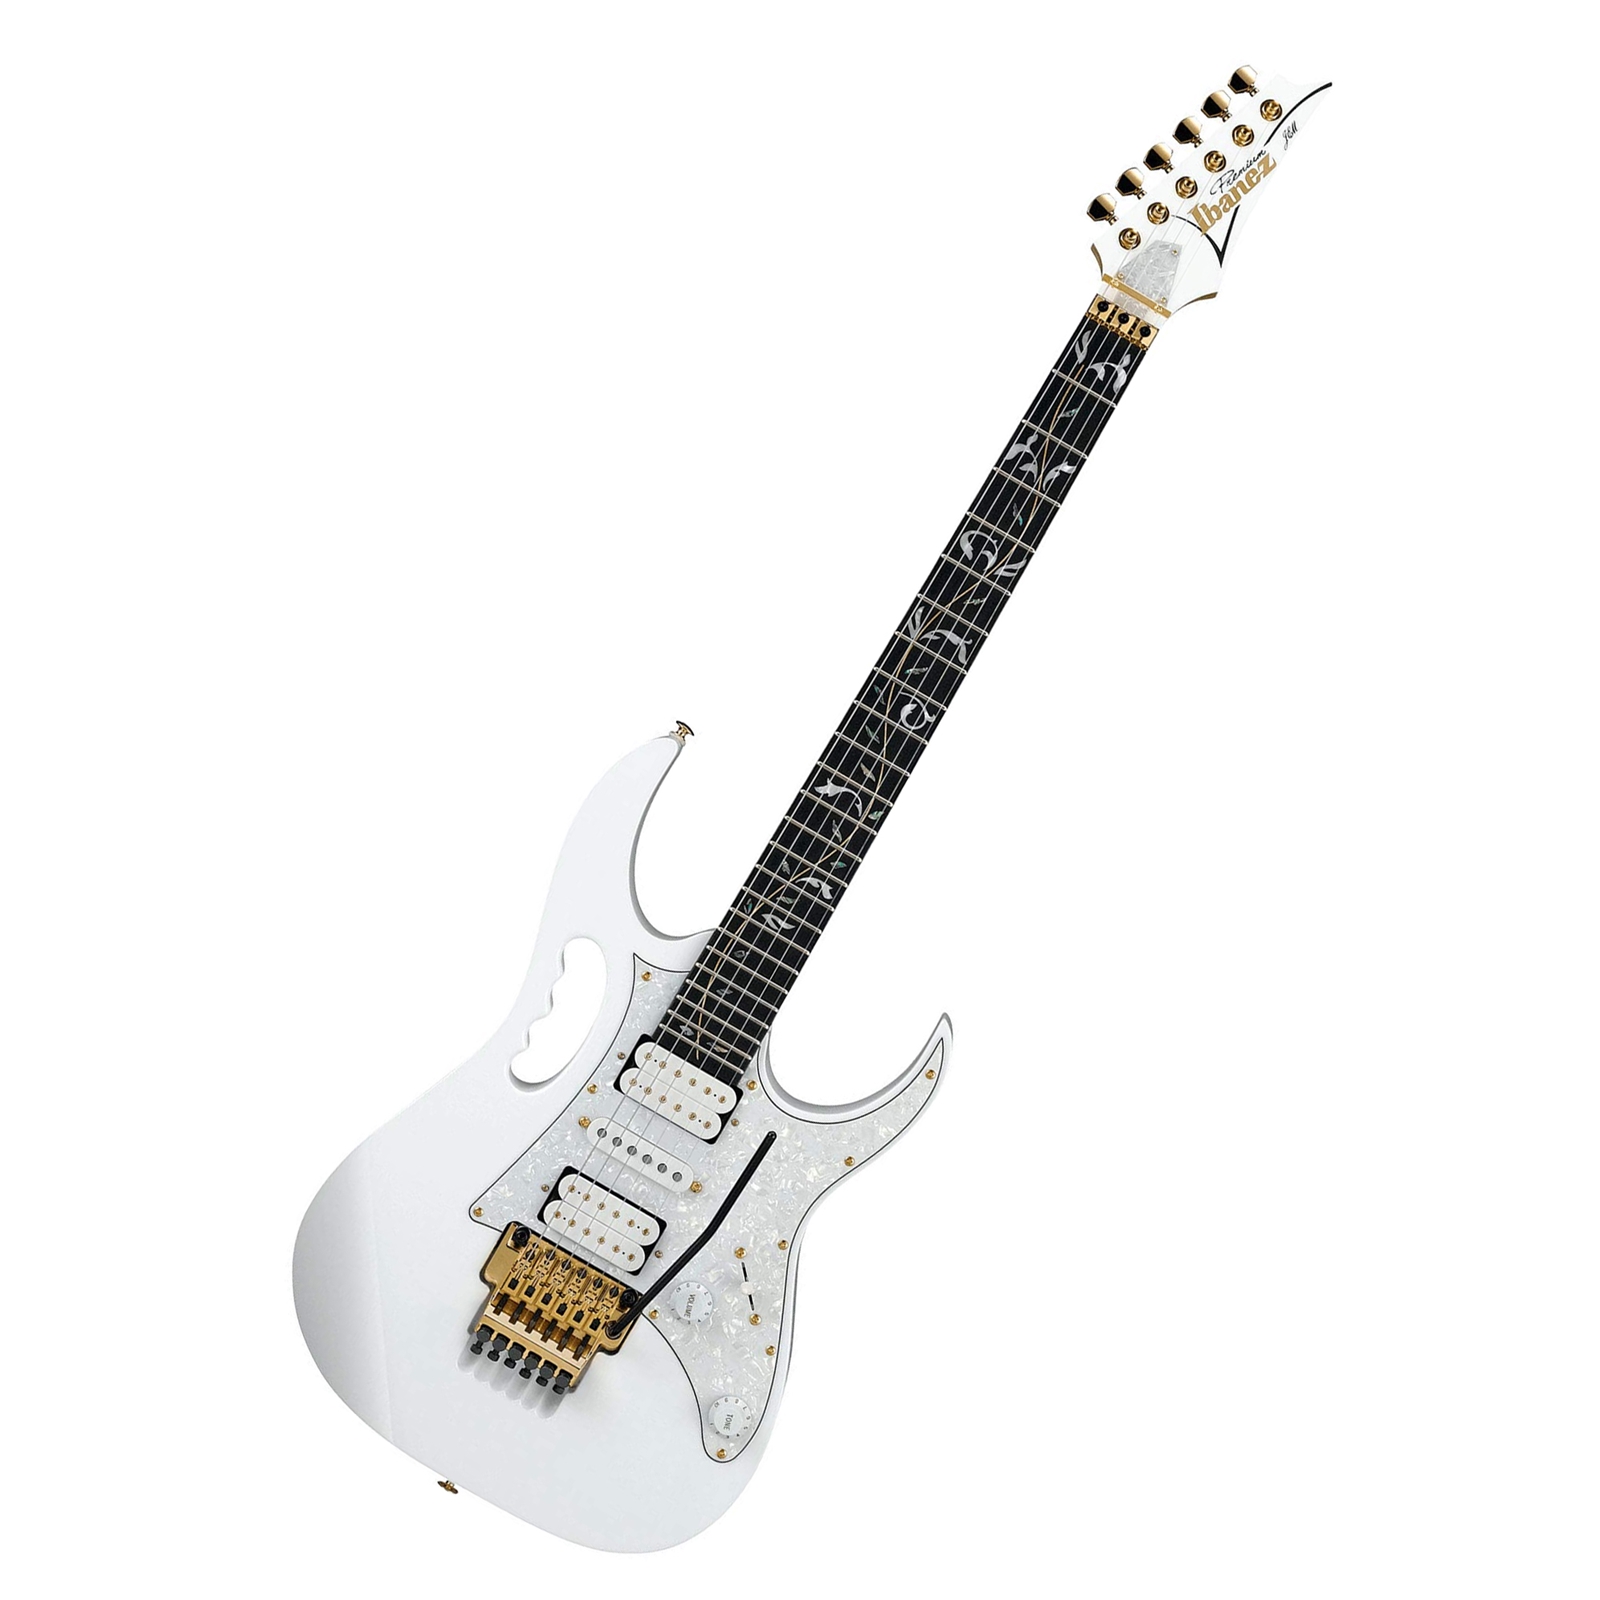 Ibanez Steve Vai Signature Series Electric Guitar